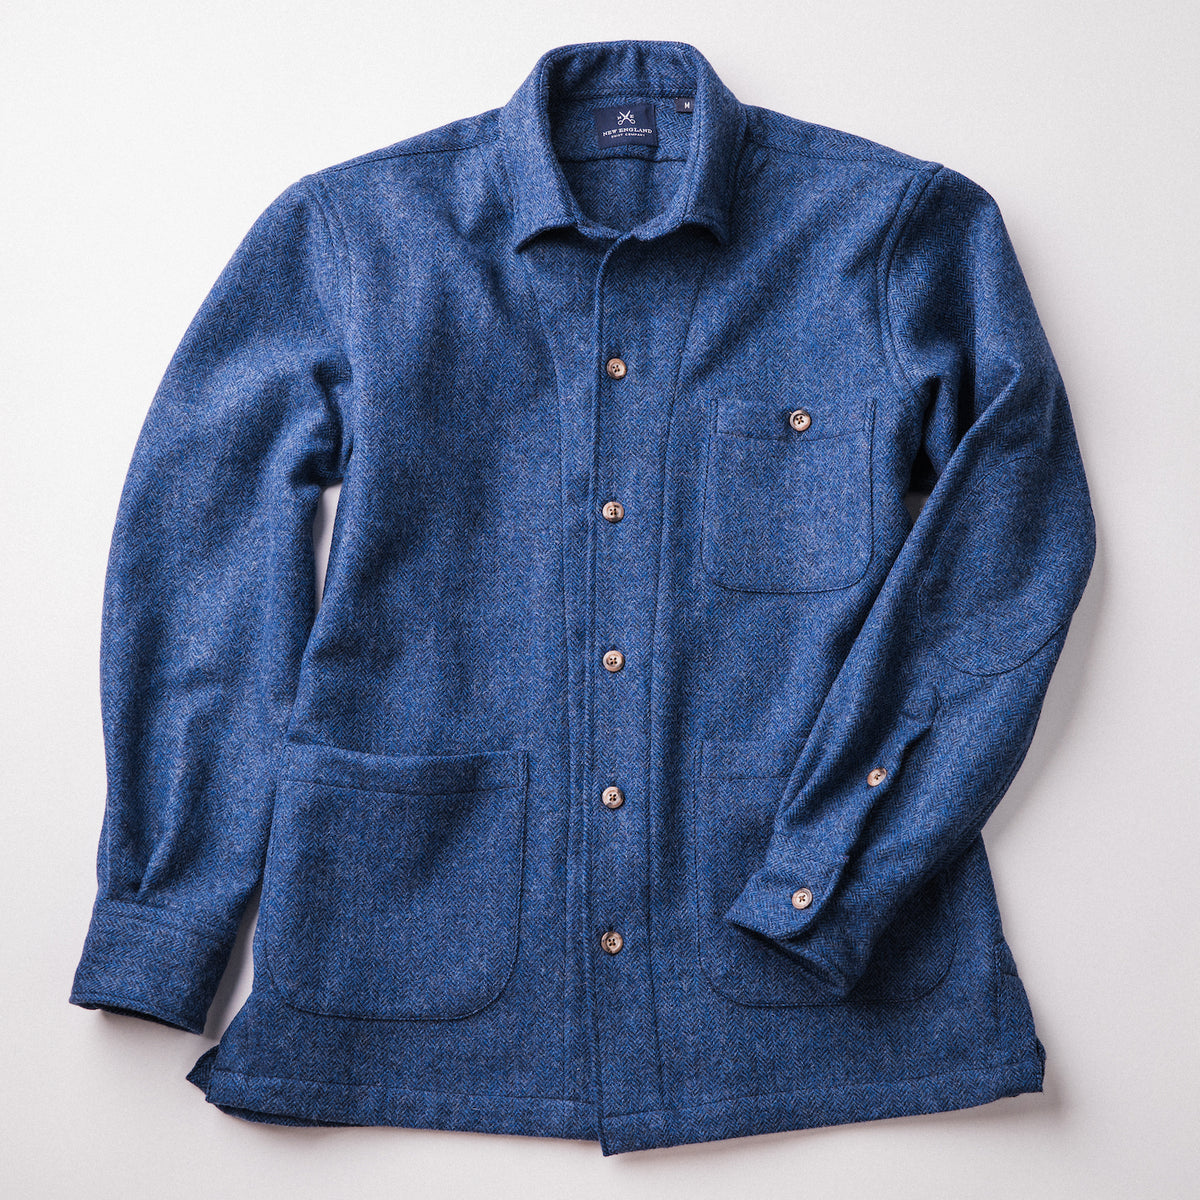 AWC Wool Tweed Blue Wye Shirt Jacket